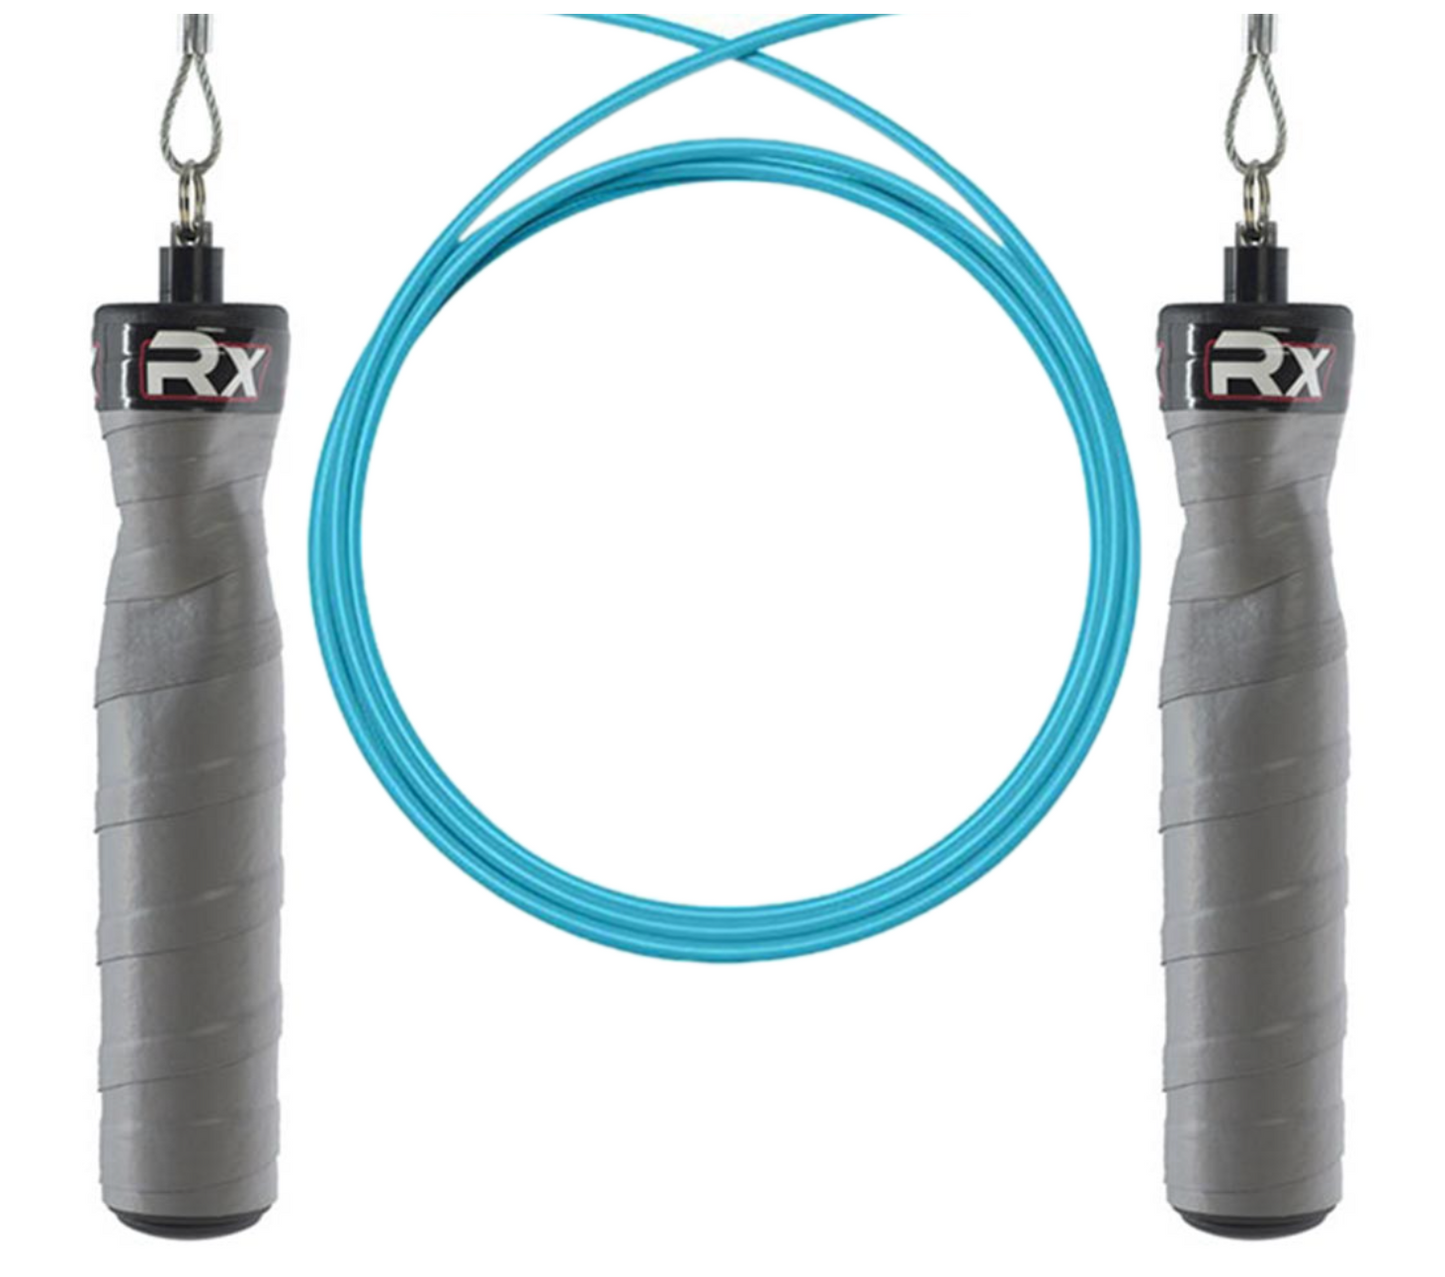 Original Rx Jump Rope, Gauntlet Grey Handle & Teal Cable